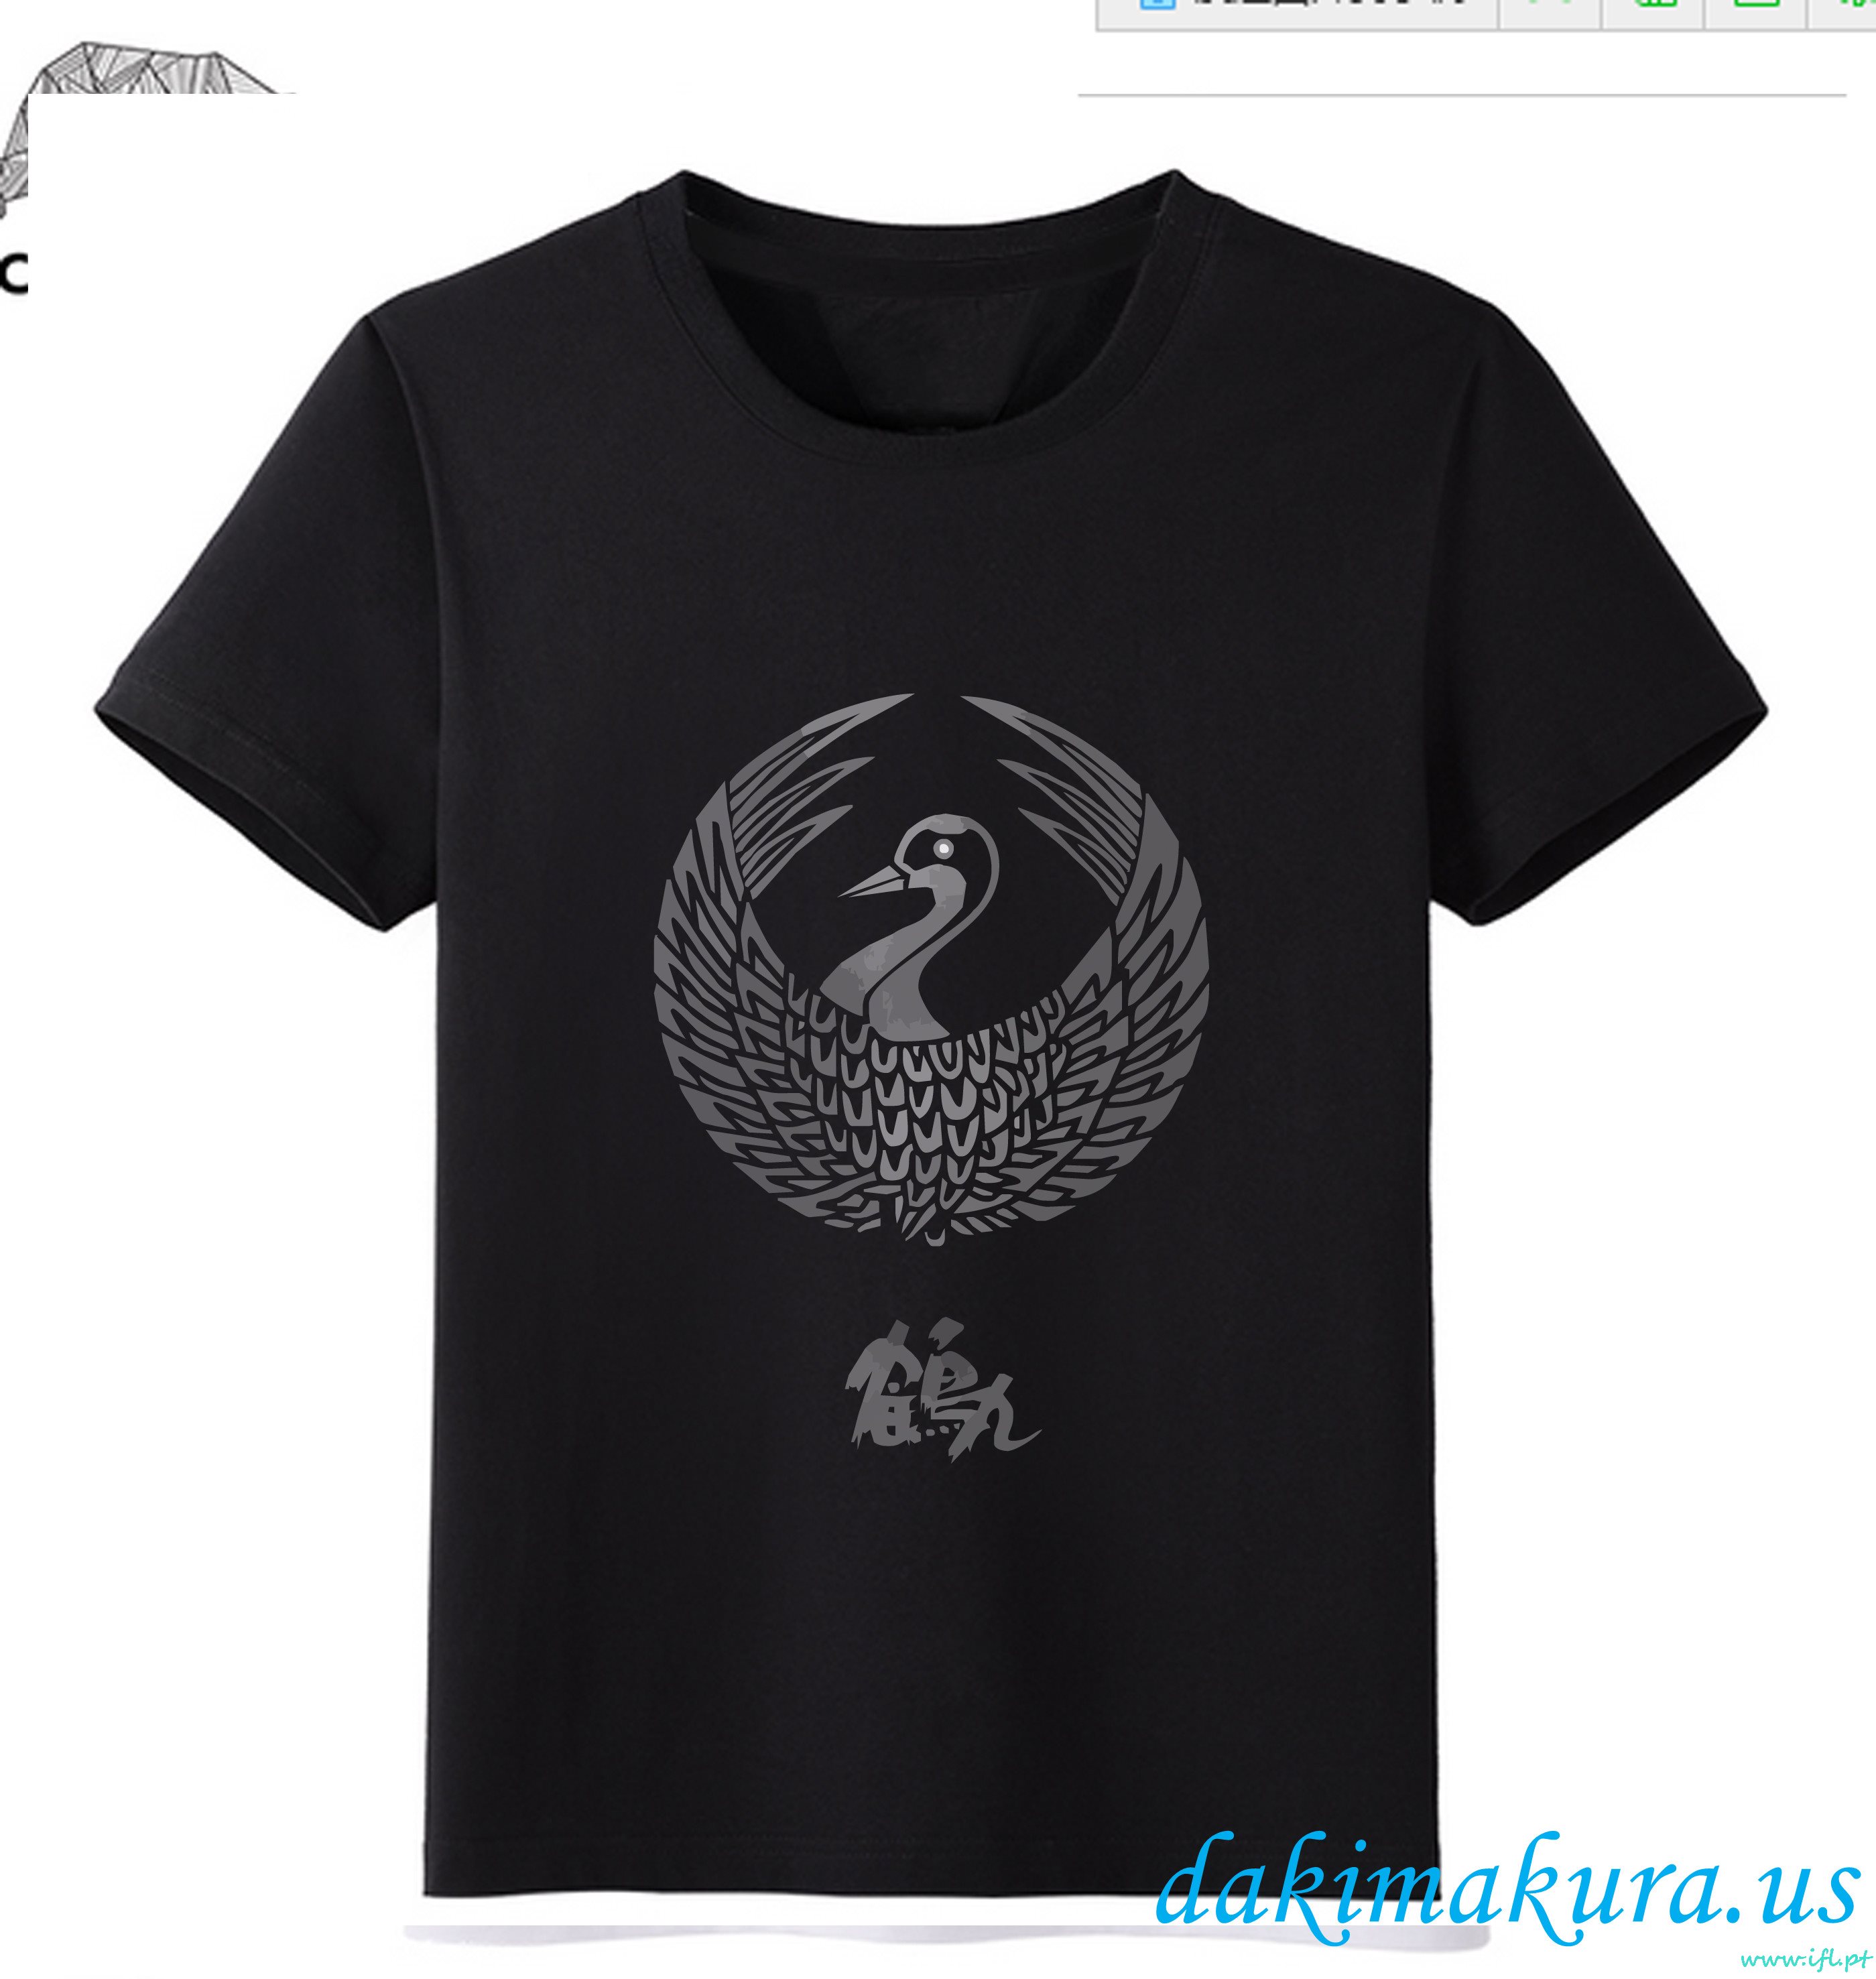 Cheap Black - Touken Ranbu Online Men Anime Fashion T-shirts From China Factory